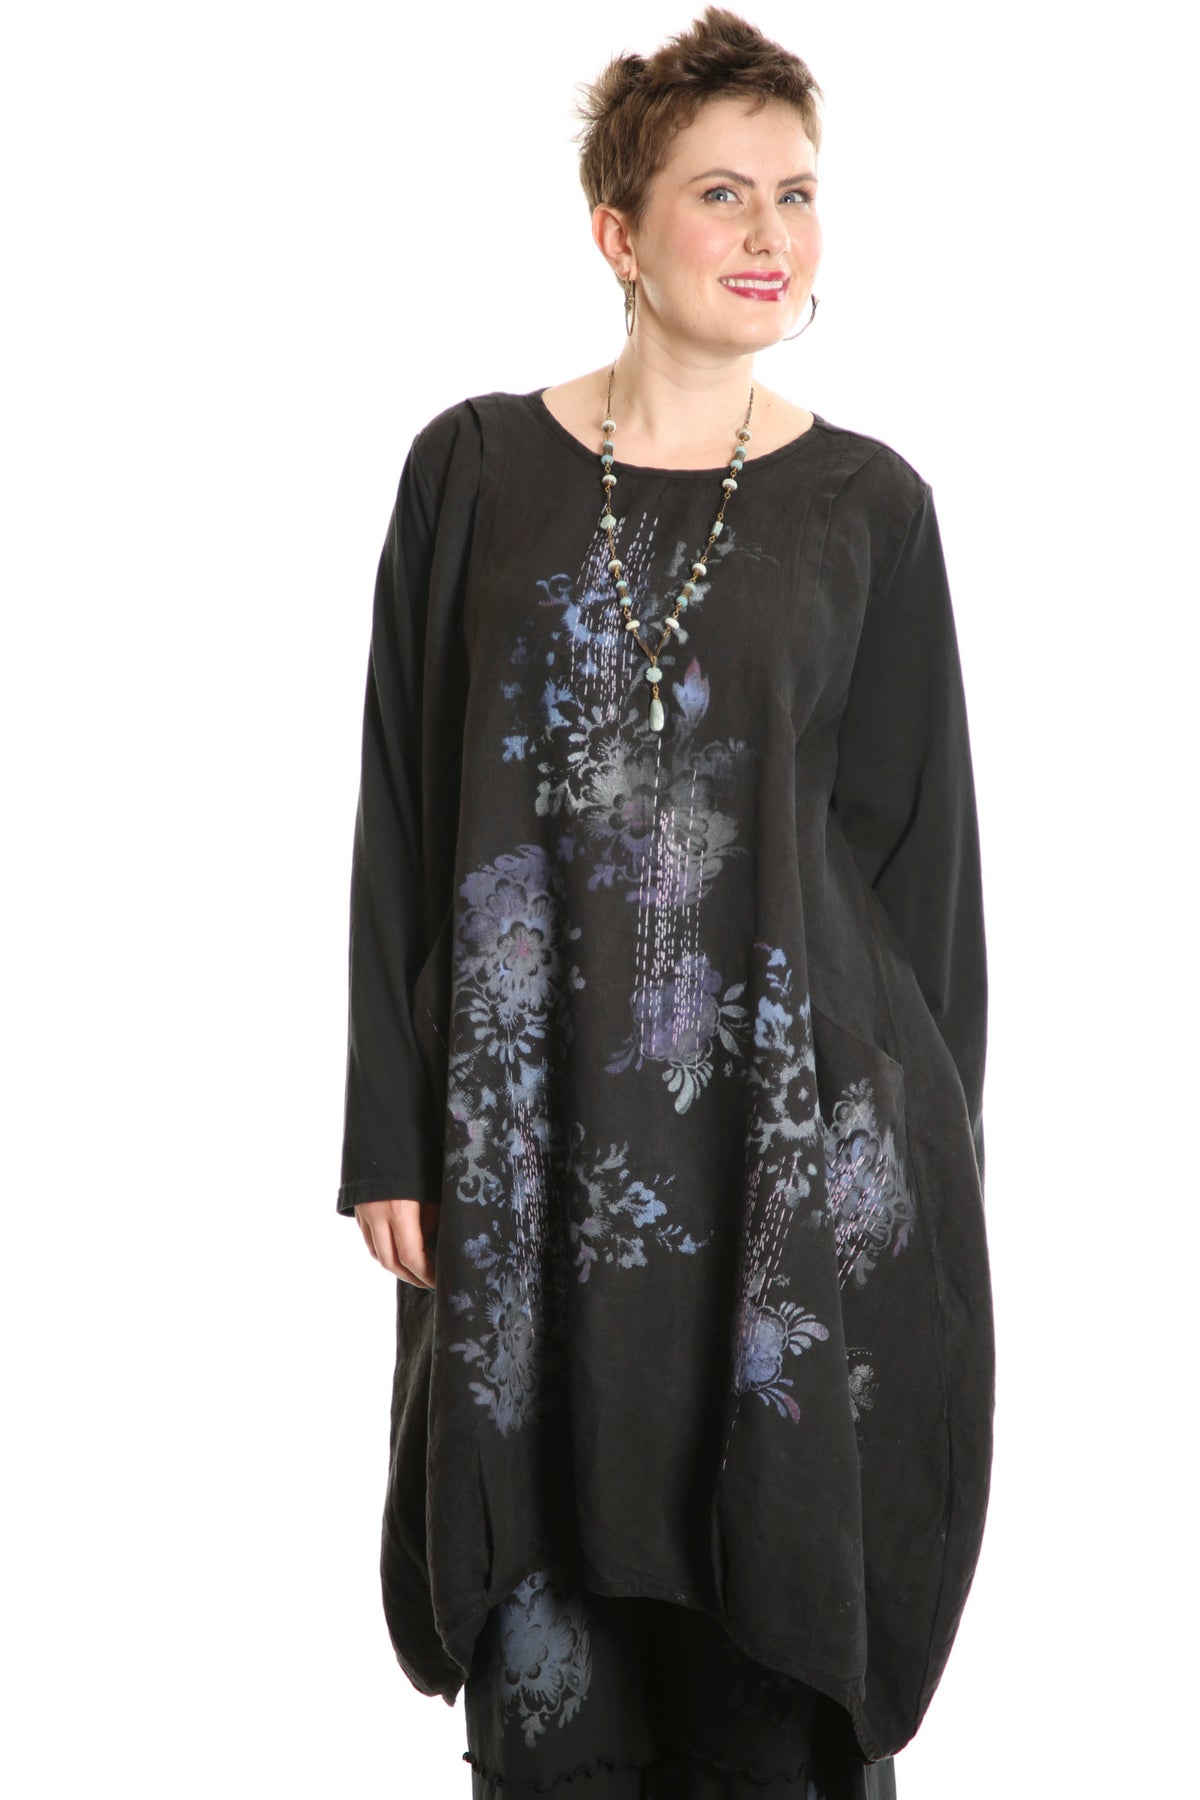 7205 Studio Dress Black - Printed -antique colorful floral